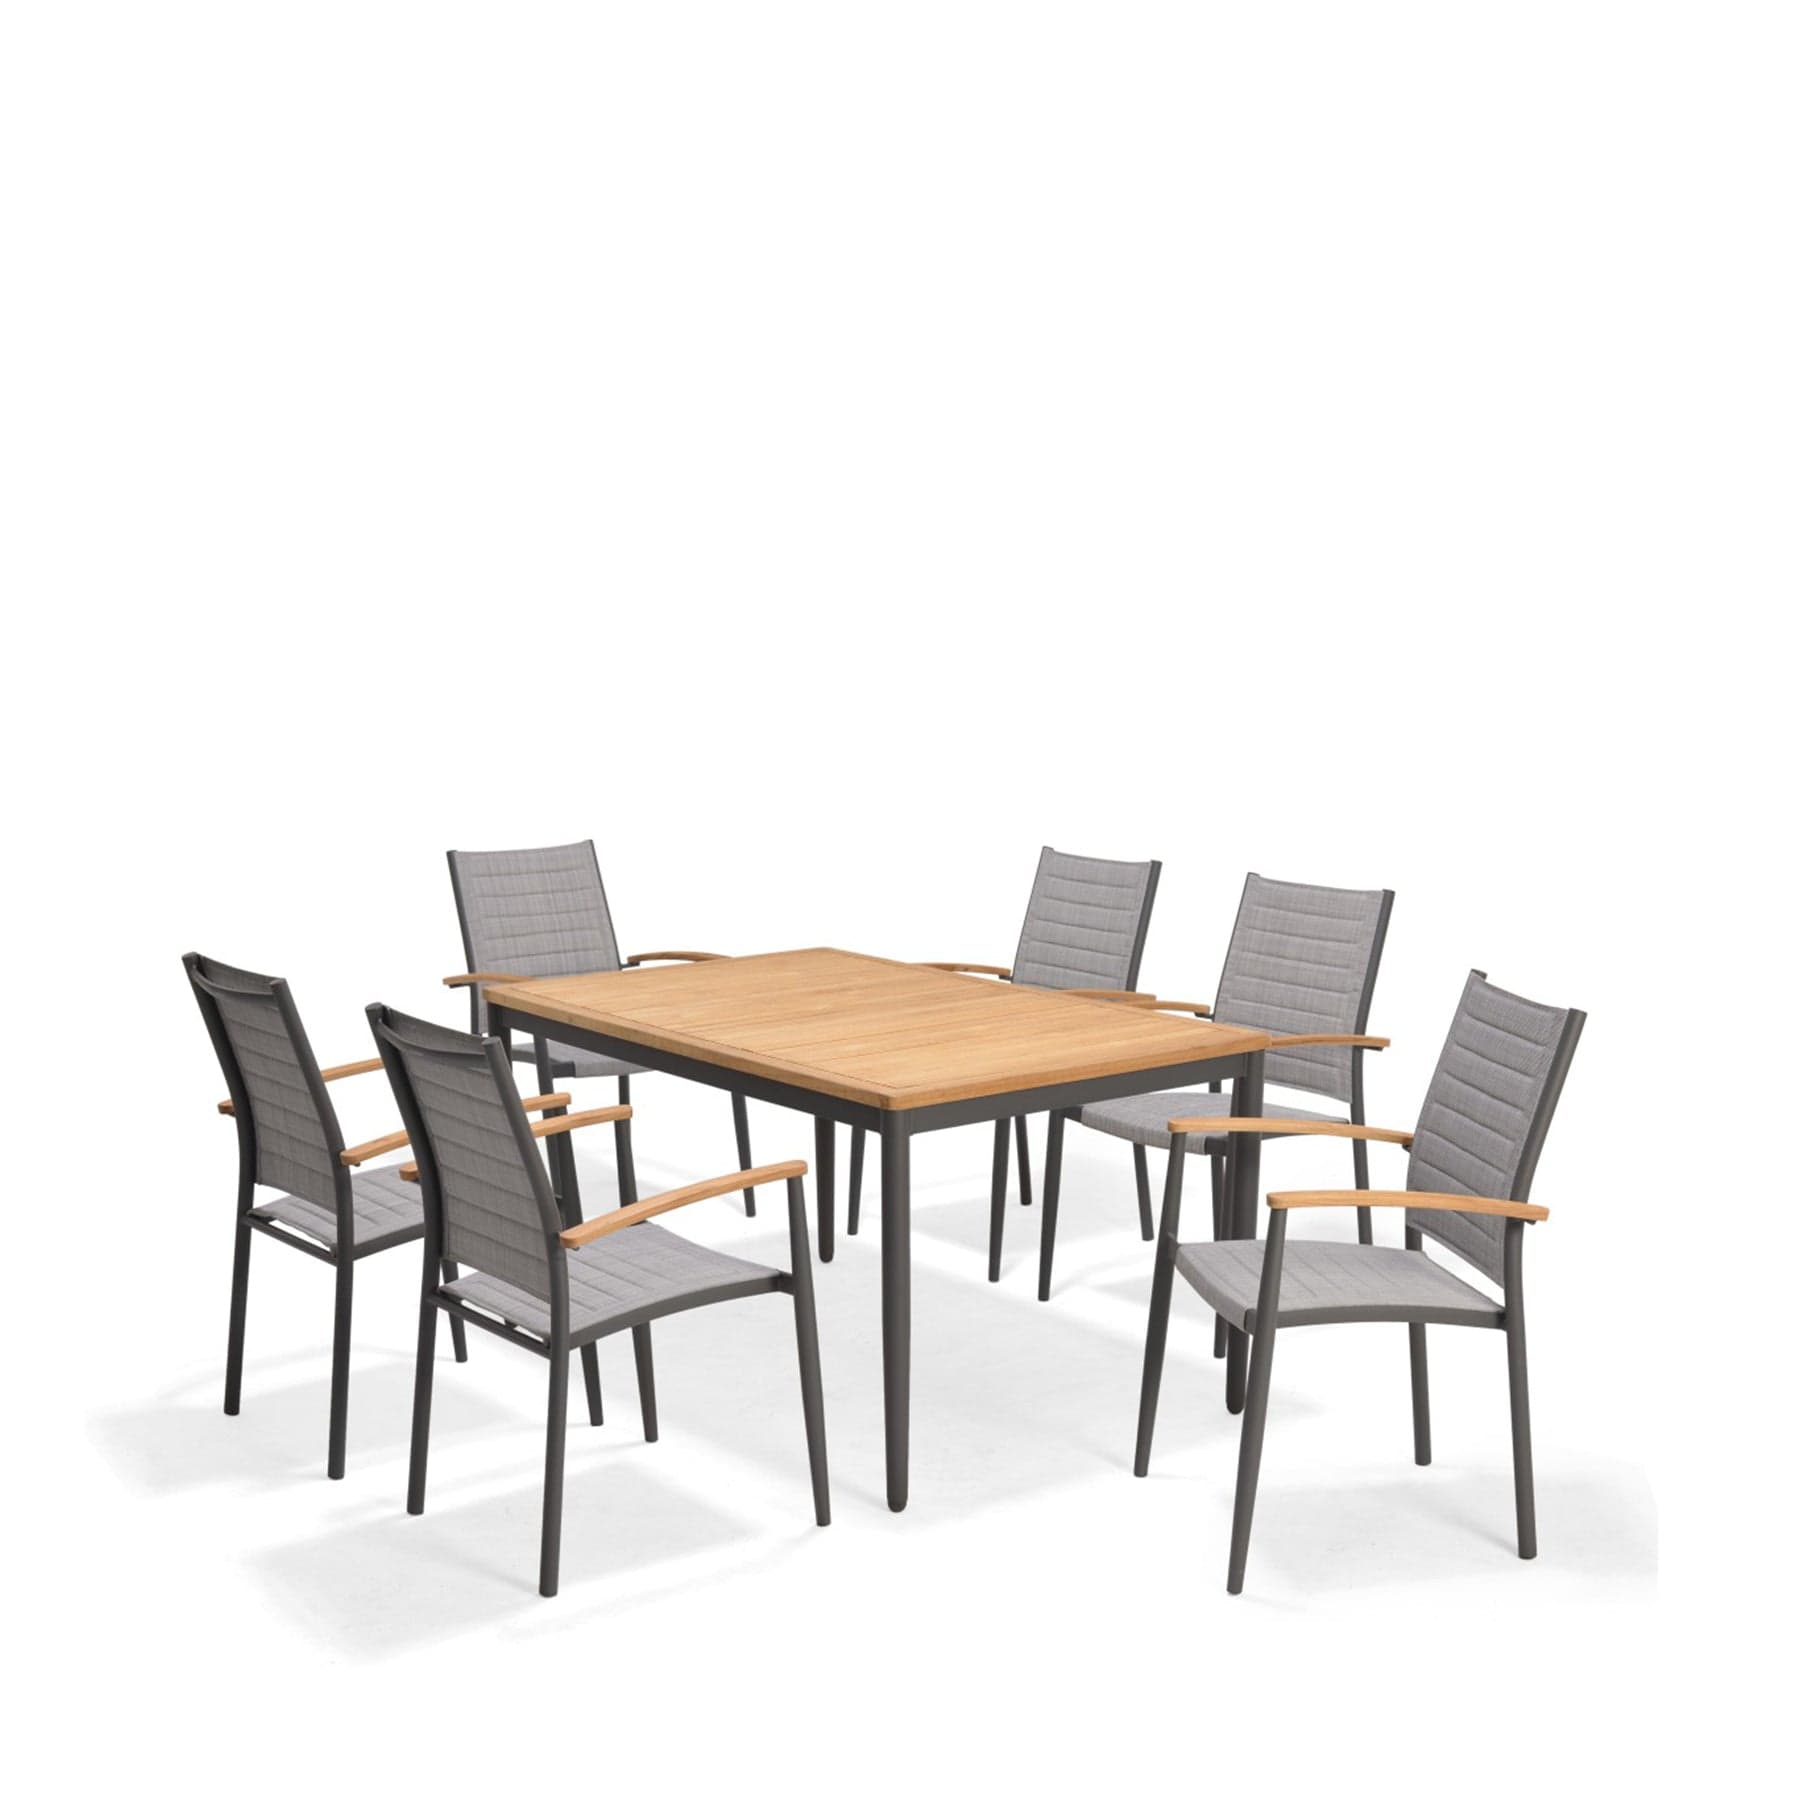 Topaz dining set 144x90cm 6 chairs